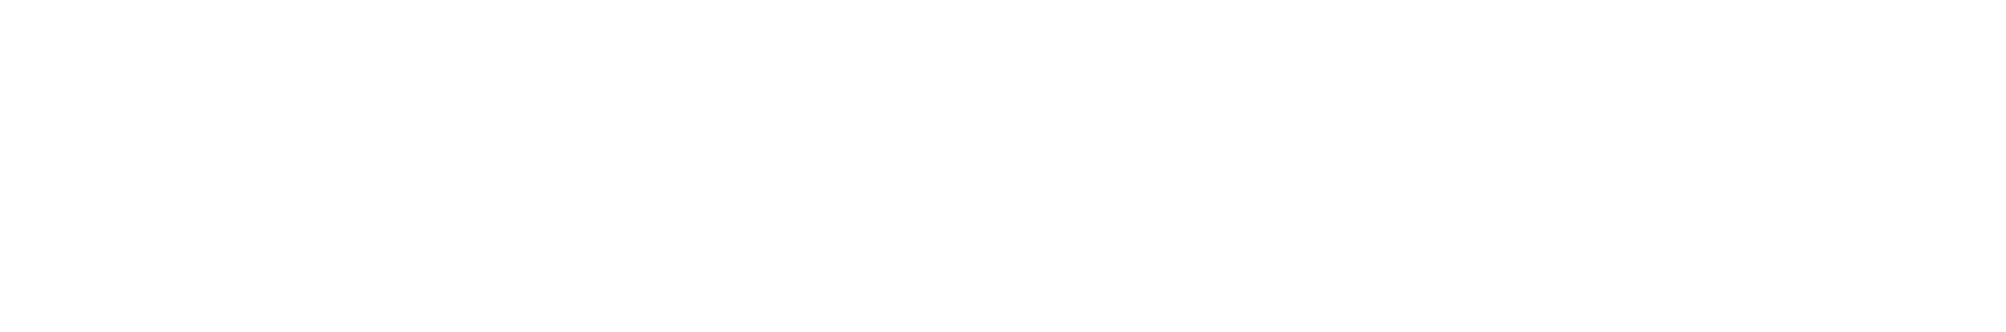 cornerstone managed properties logo